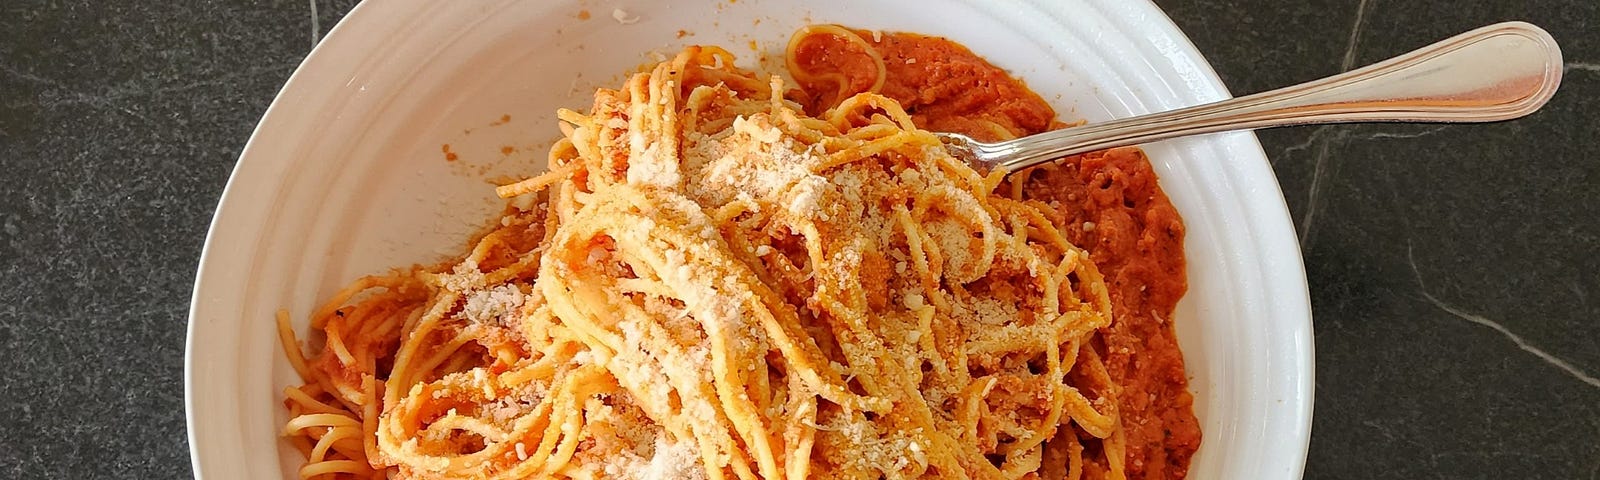 A plate full of spaghetti